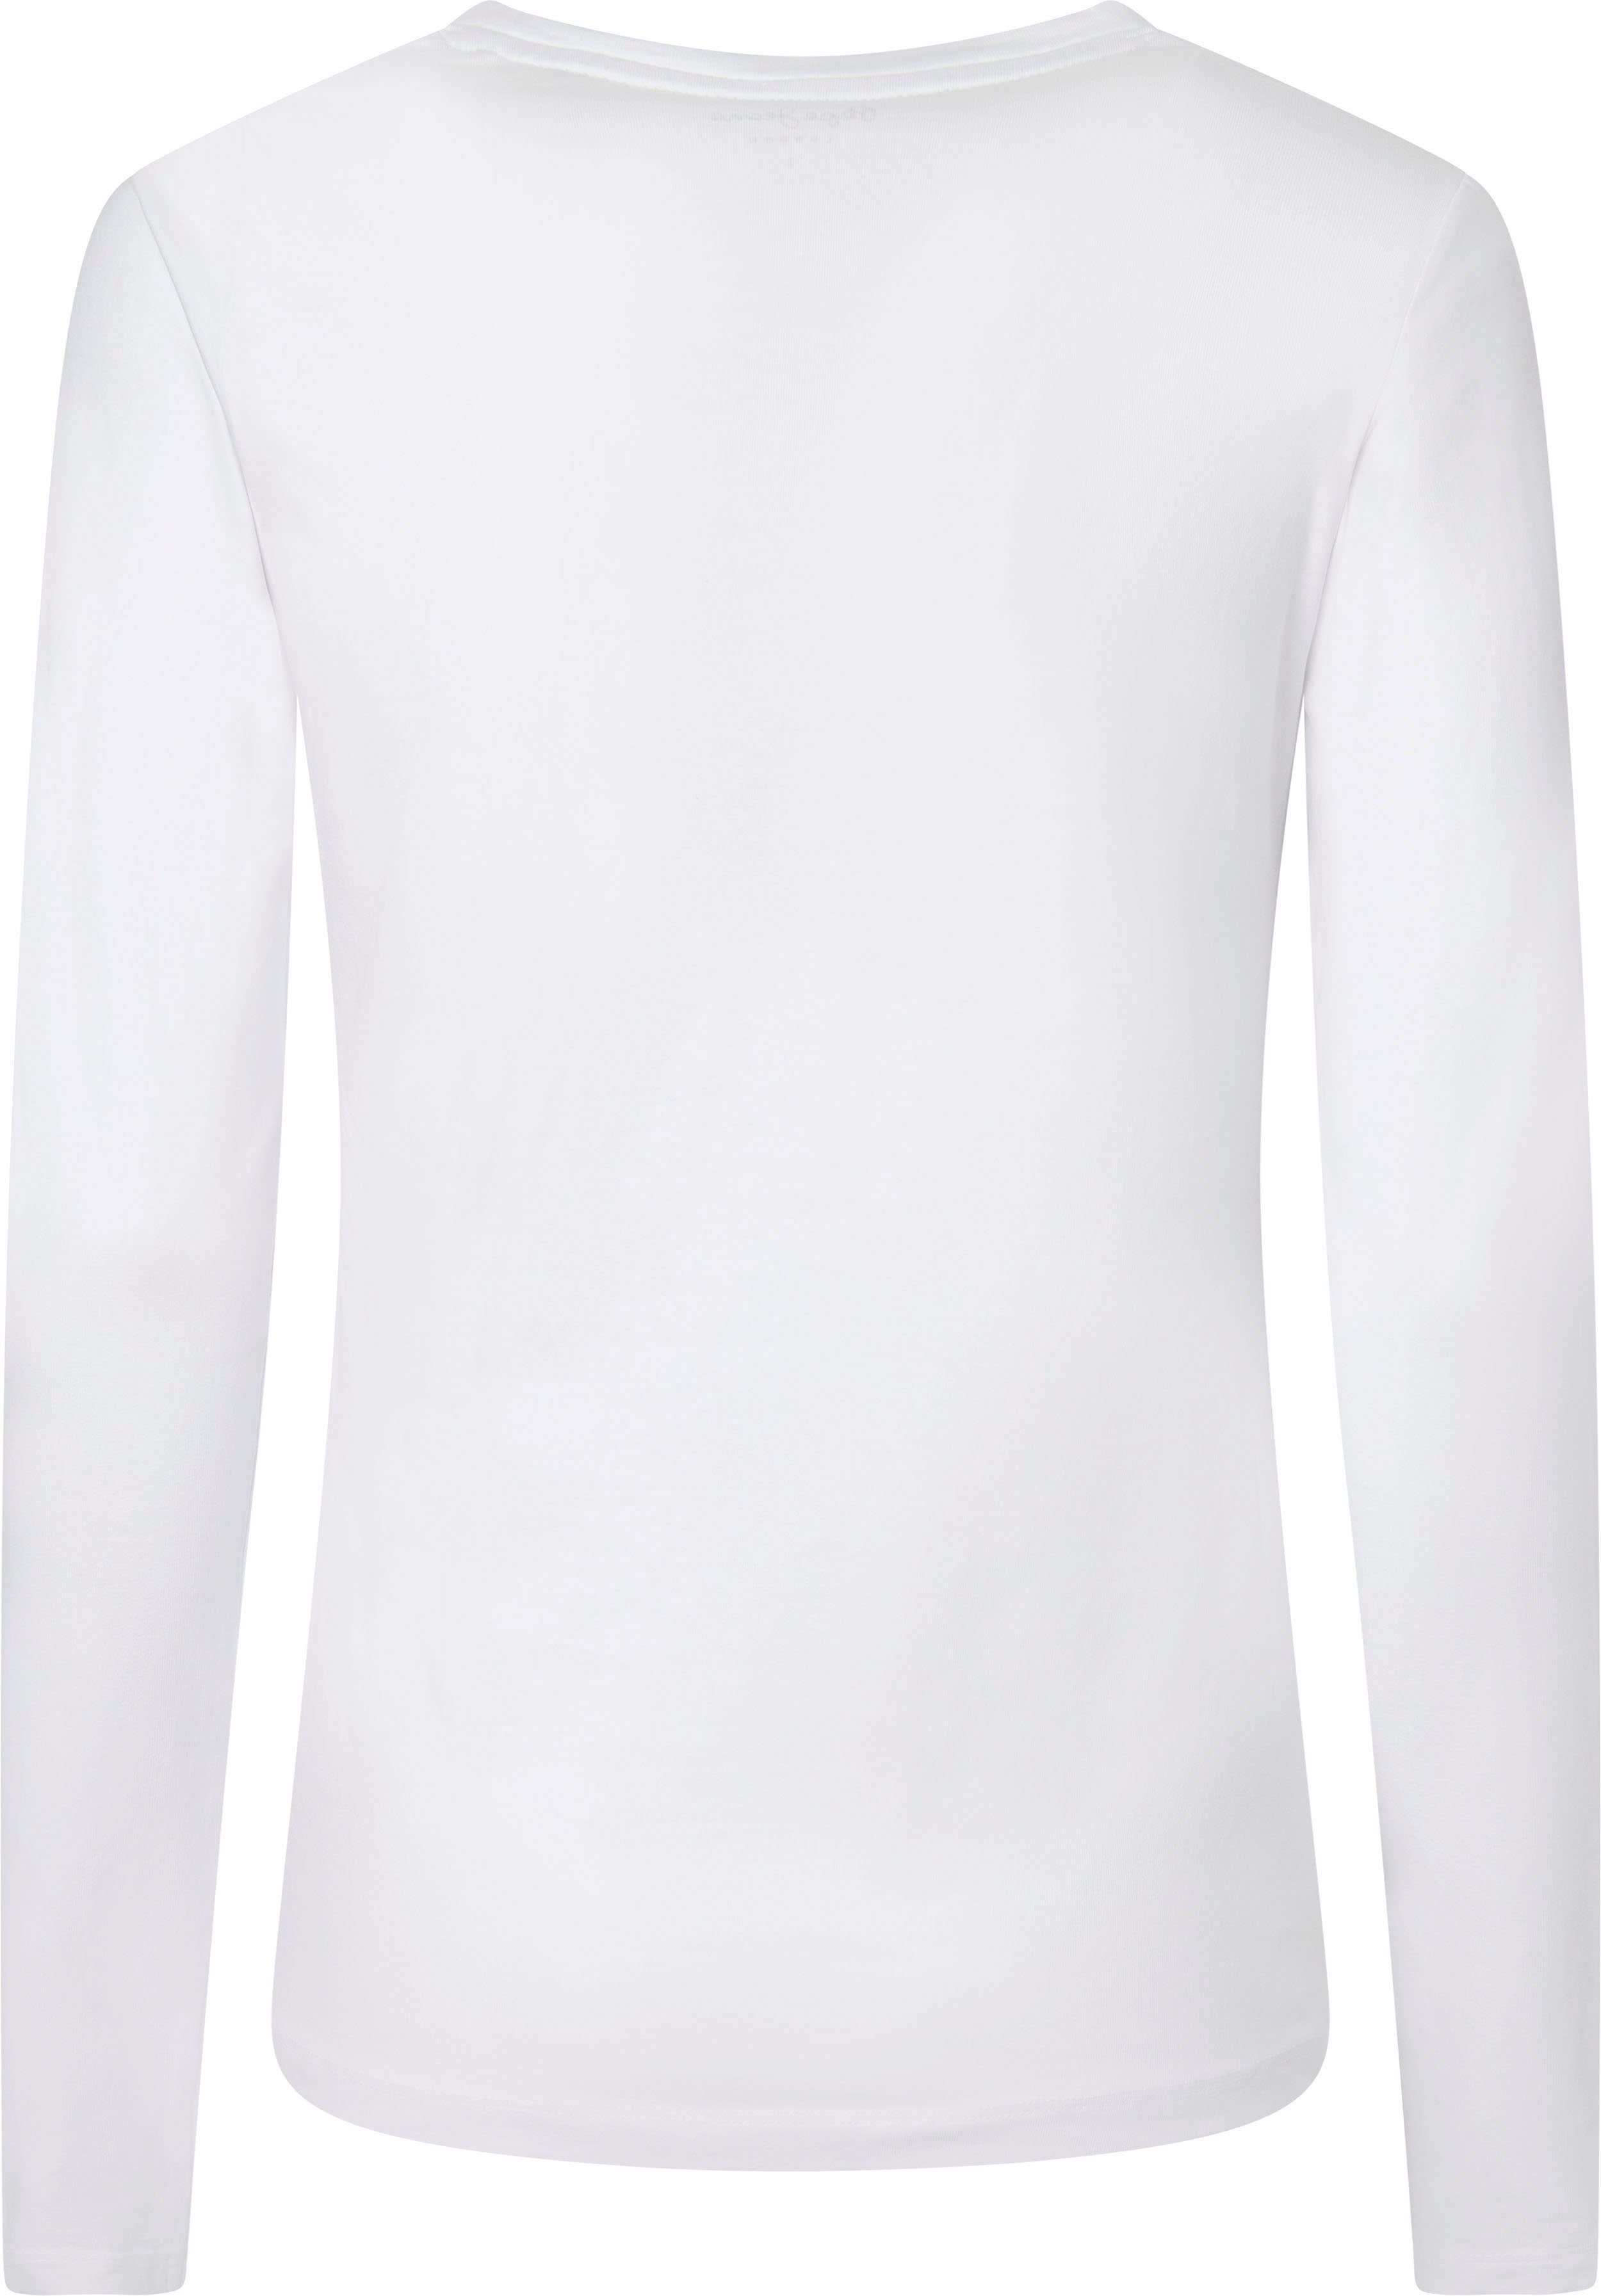 Pepe im Marken-Logo-Print Jeans Langarmshirt 8WHITE N AMBERTA kleinem mit Brustbereich